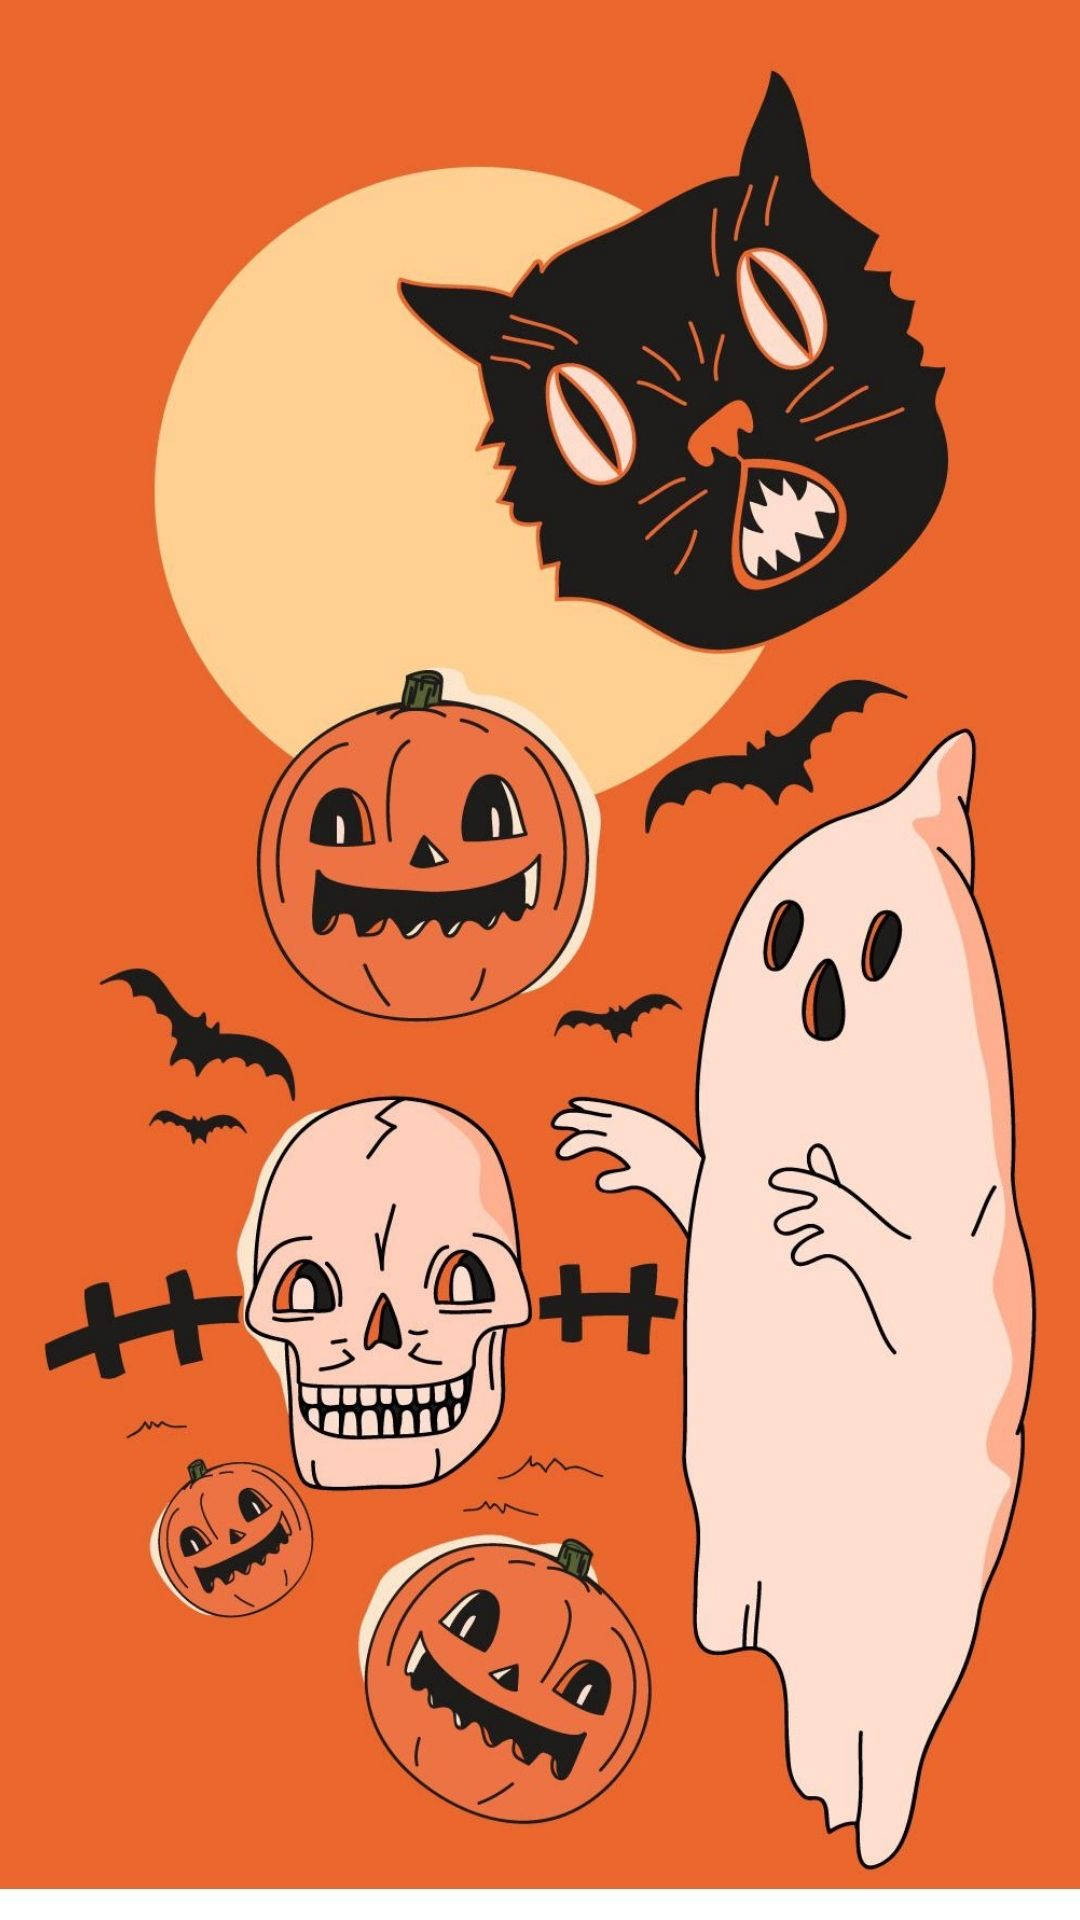 Free Cartoon Halloween Wallpaper Downloads, [100+] Cartoon Halloween  Wallpapers for FREE 